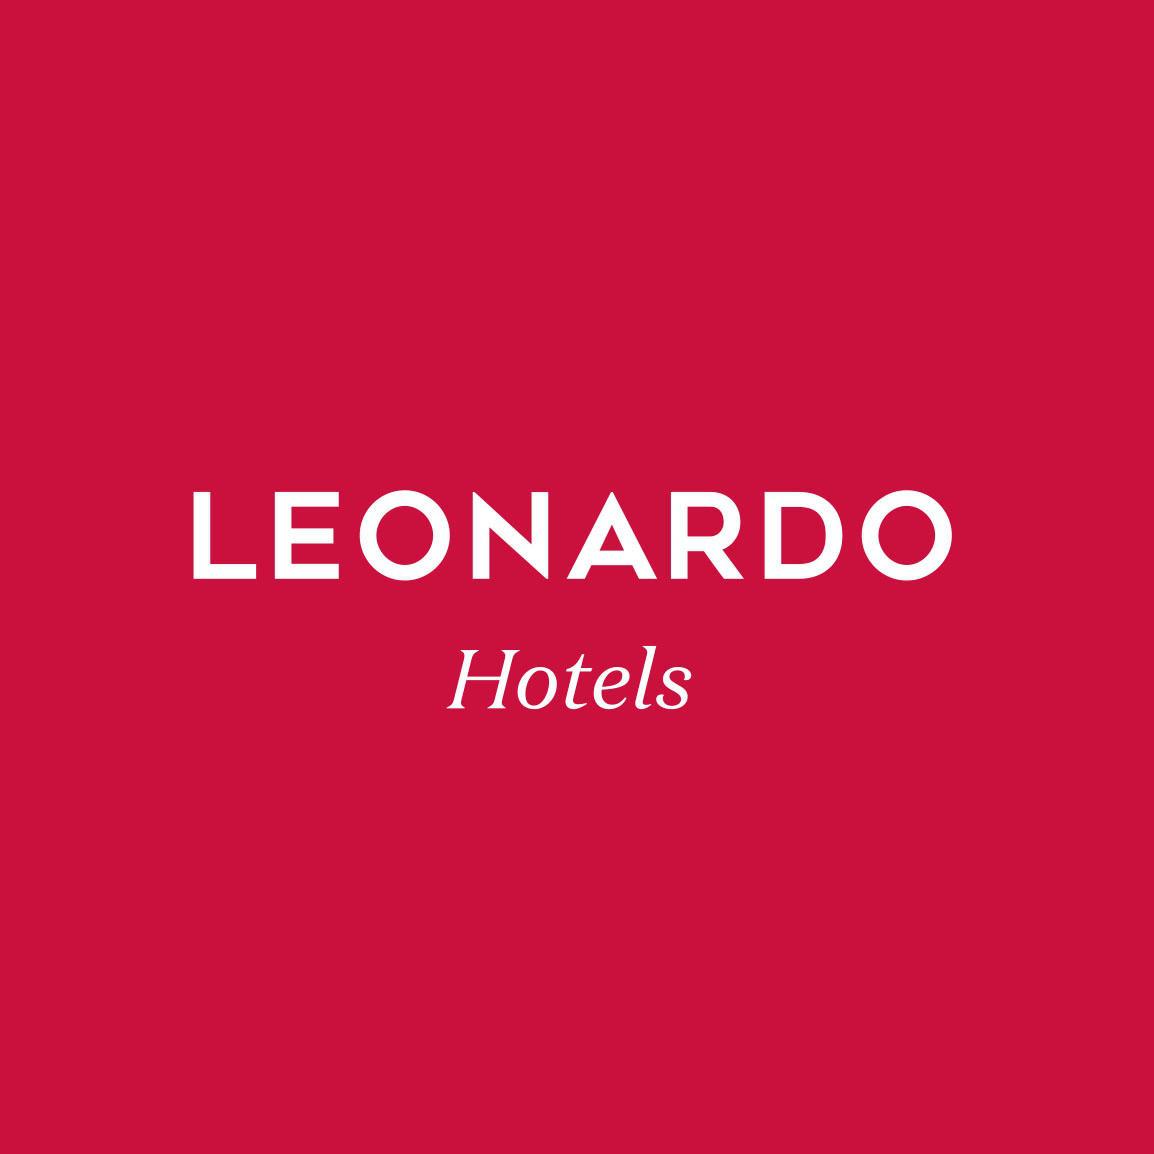 Leonardo Hotel London Heathrow Airport - West Drayton, London UB7 0DP - 020 8990 0000 | ShowMeLocal.com